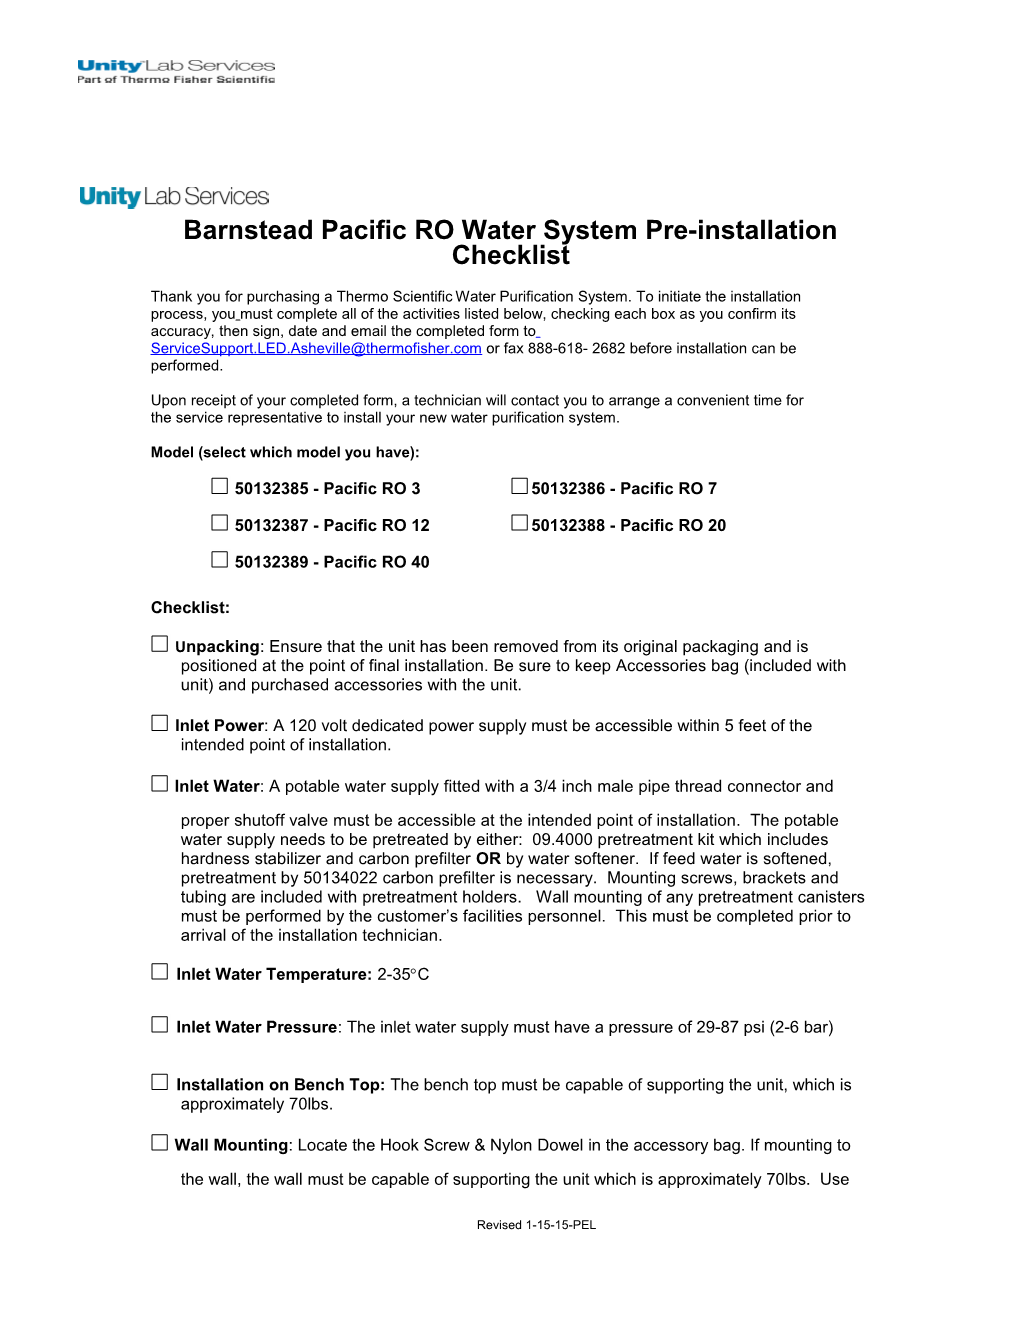 Barnstead Pacific RO Water System Pre-Installation Checklist